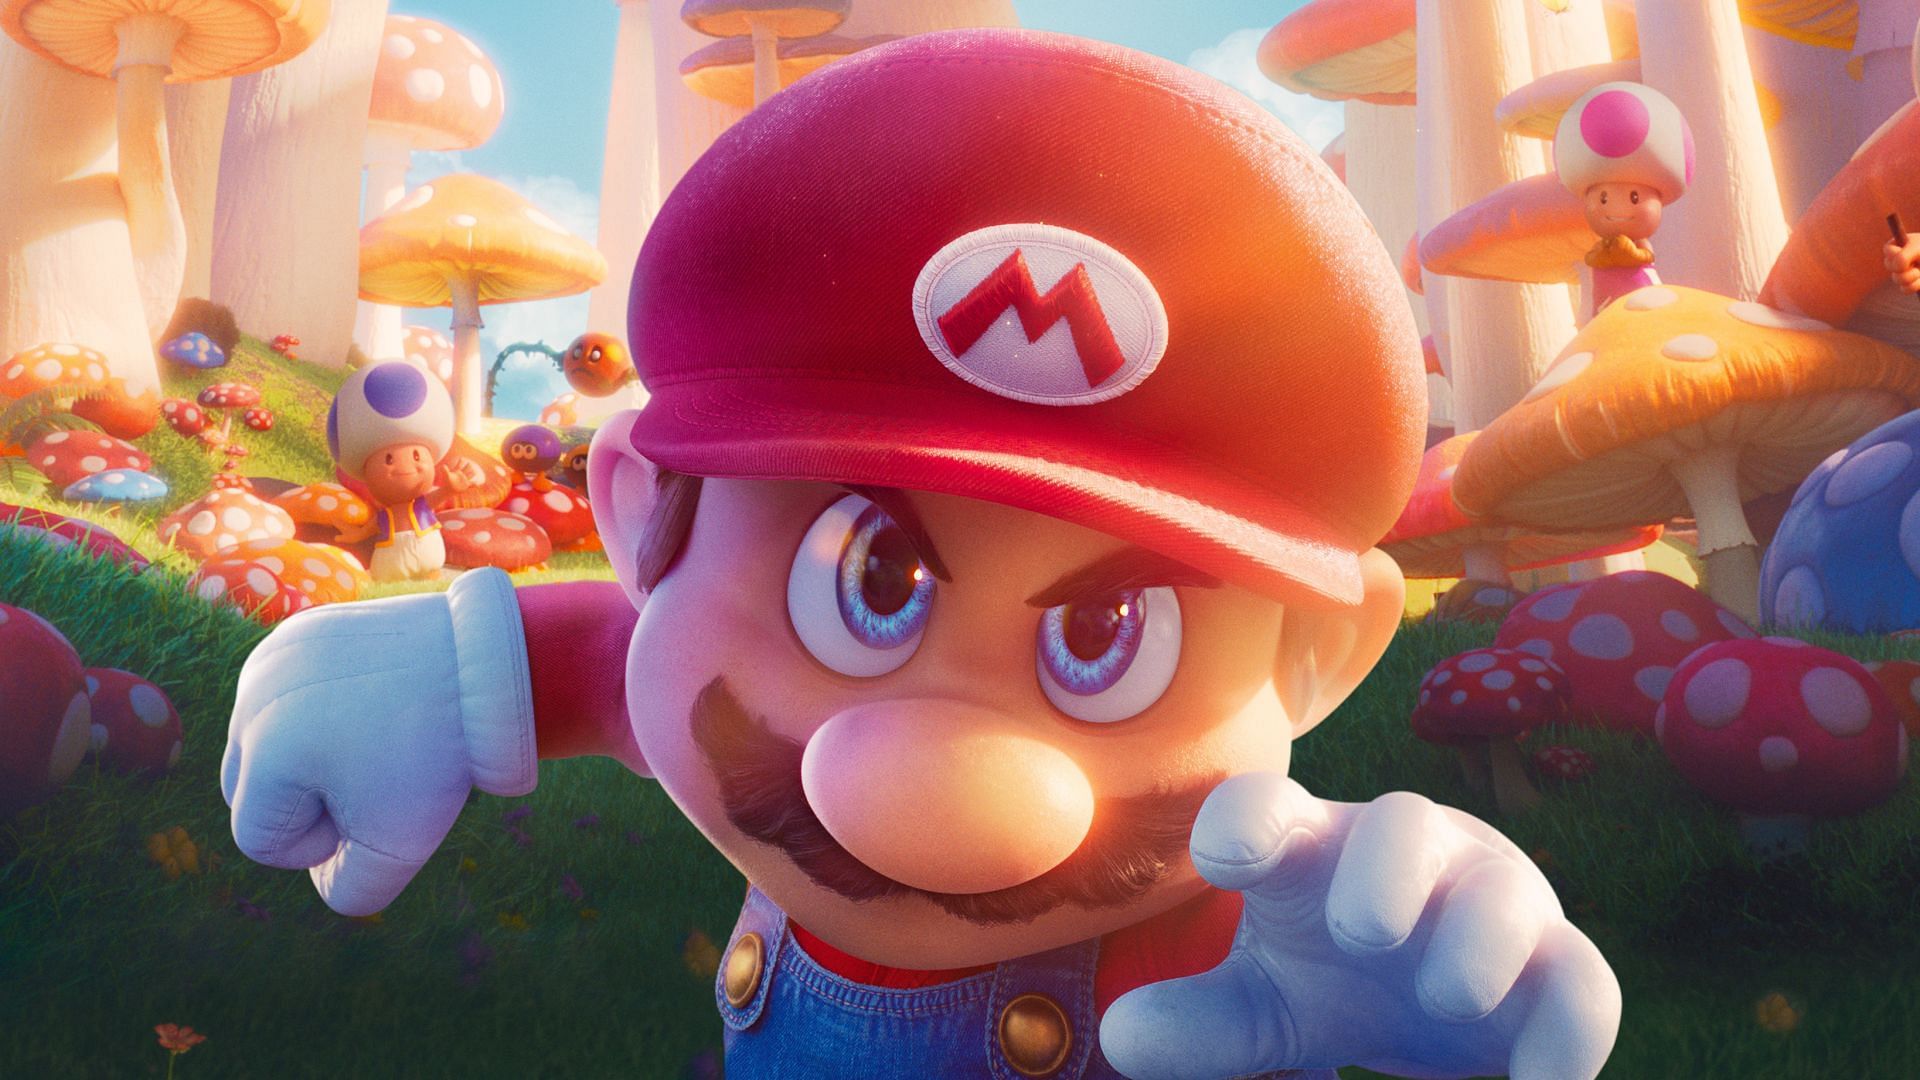 Mario in The Super Mario Bros. Movie (Image via Nintendo/Illumination Studios)